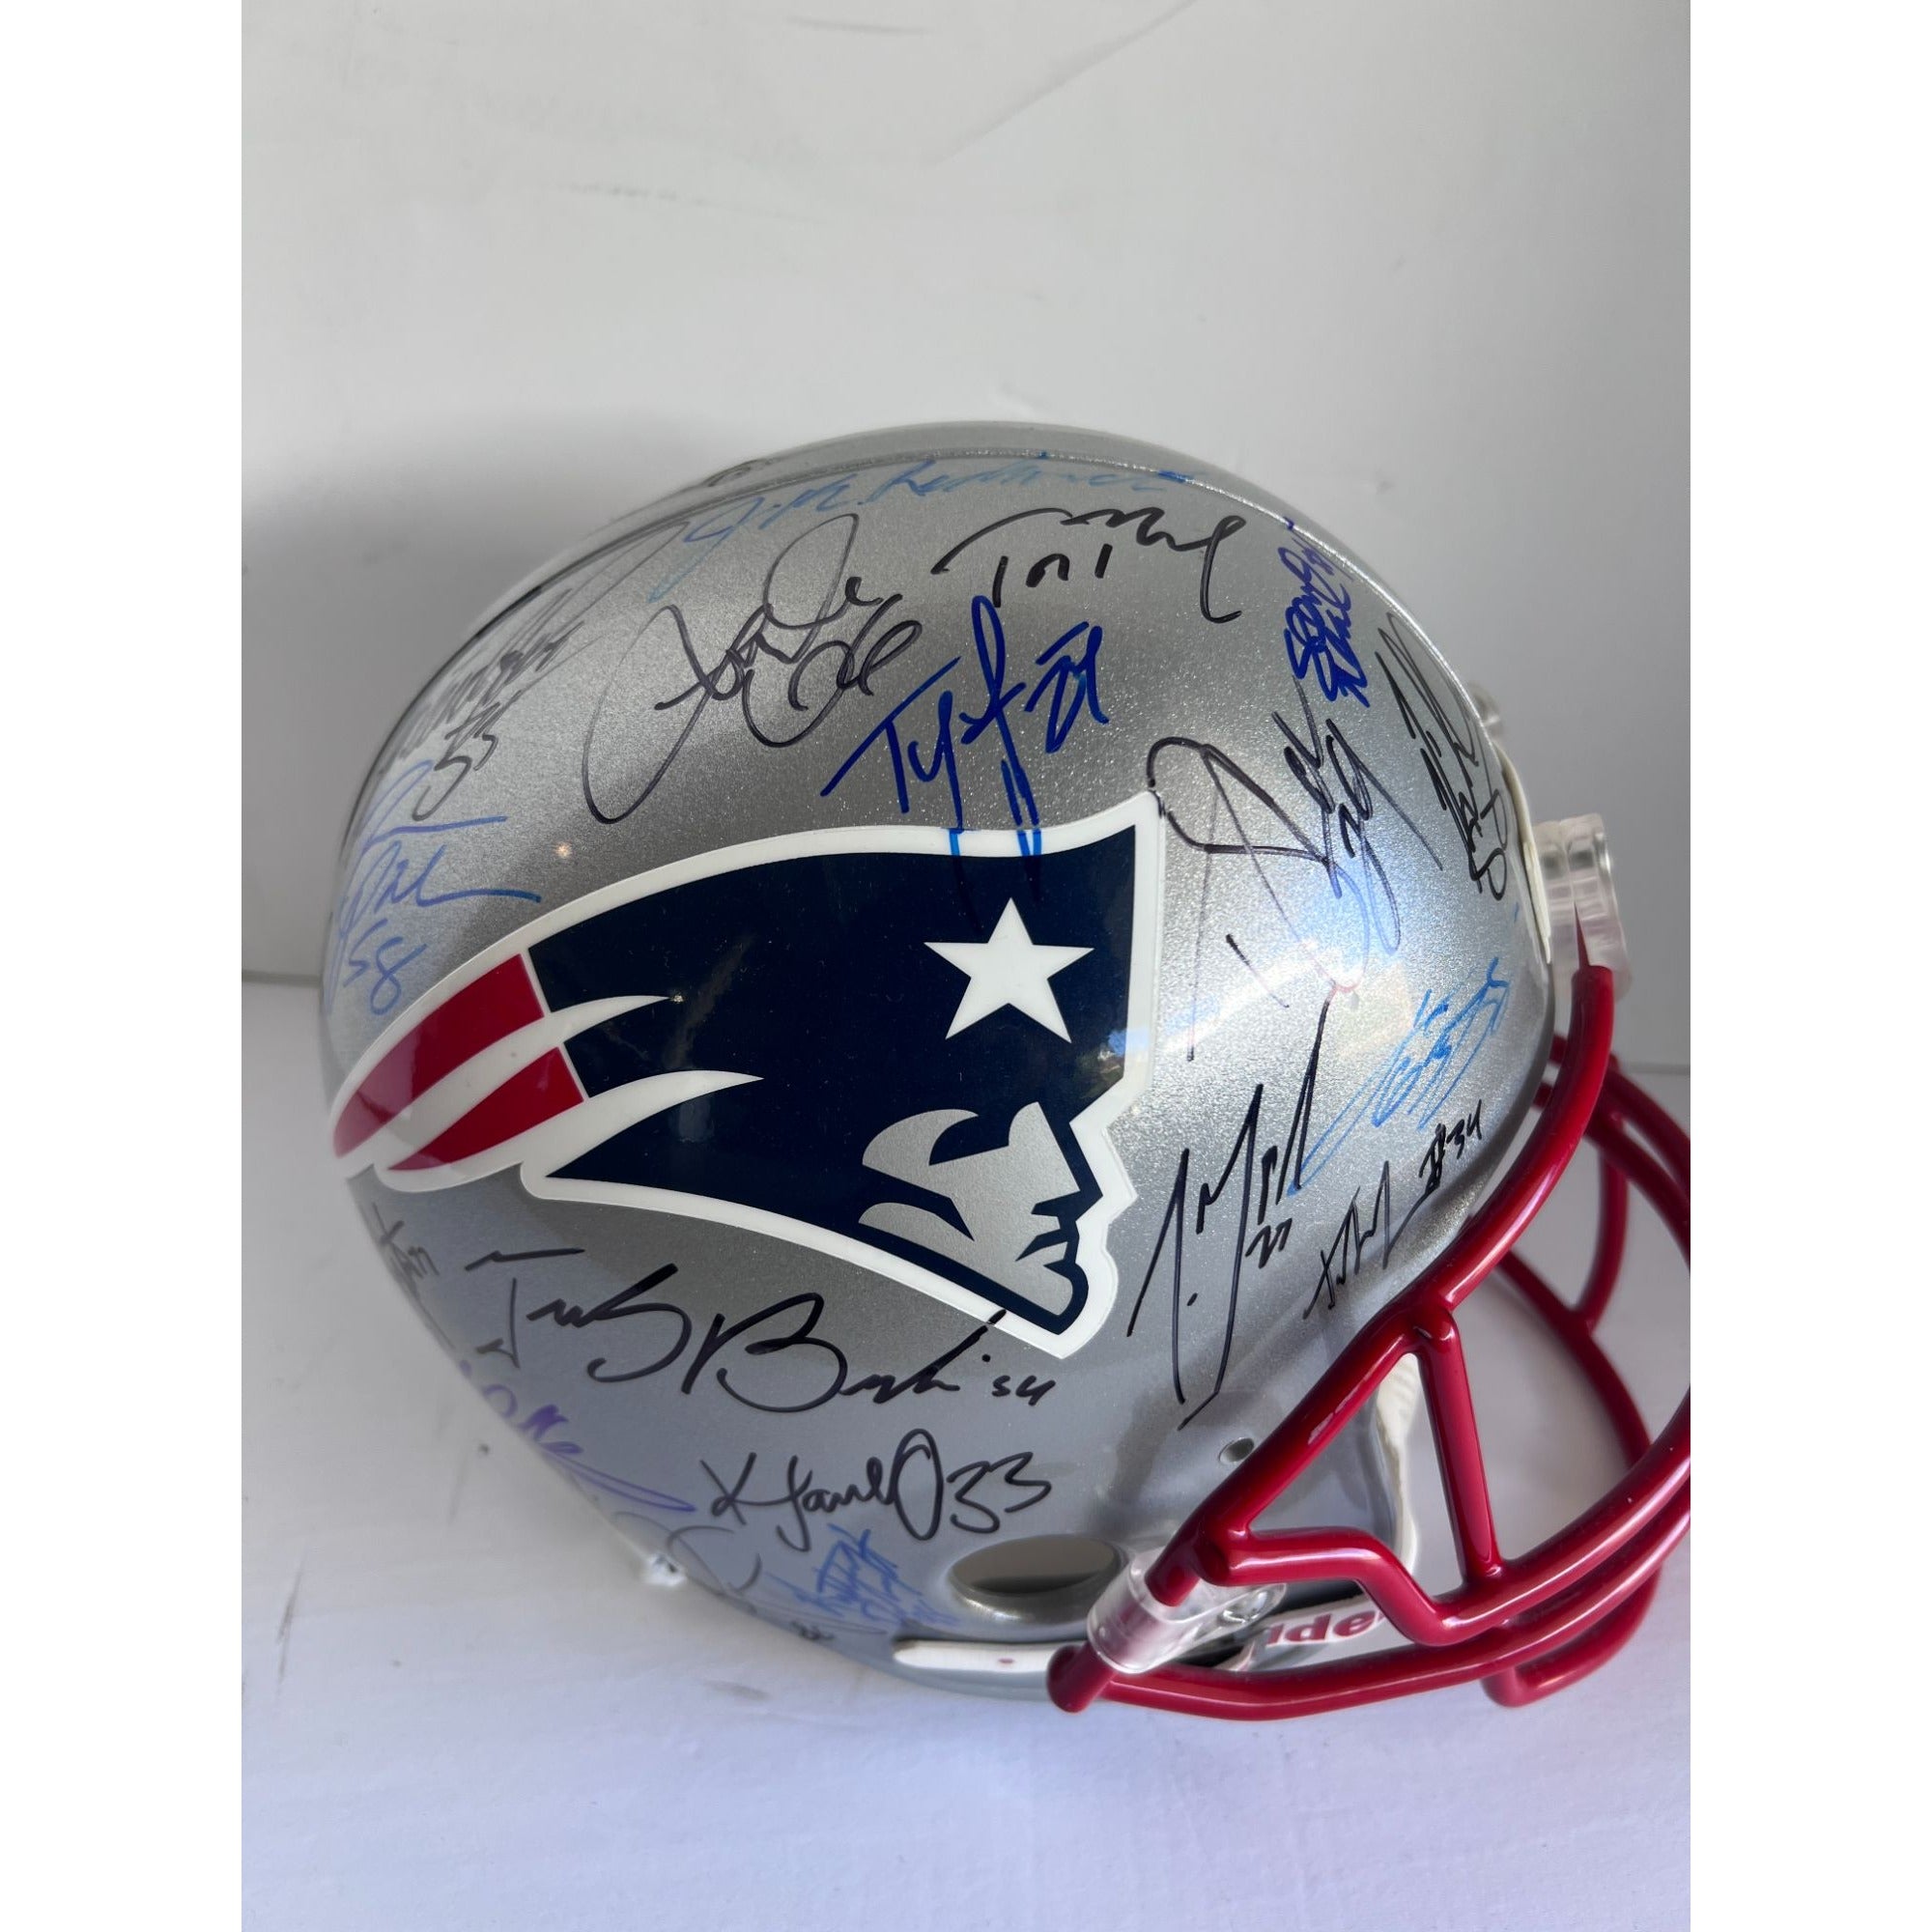 New England Patriots 2001 02 Super Bowl champions Risdell replica full size helmet Tom Brady (rookie year) Teddy Bruschi 40 plus signatures